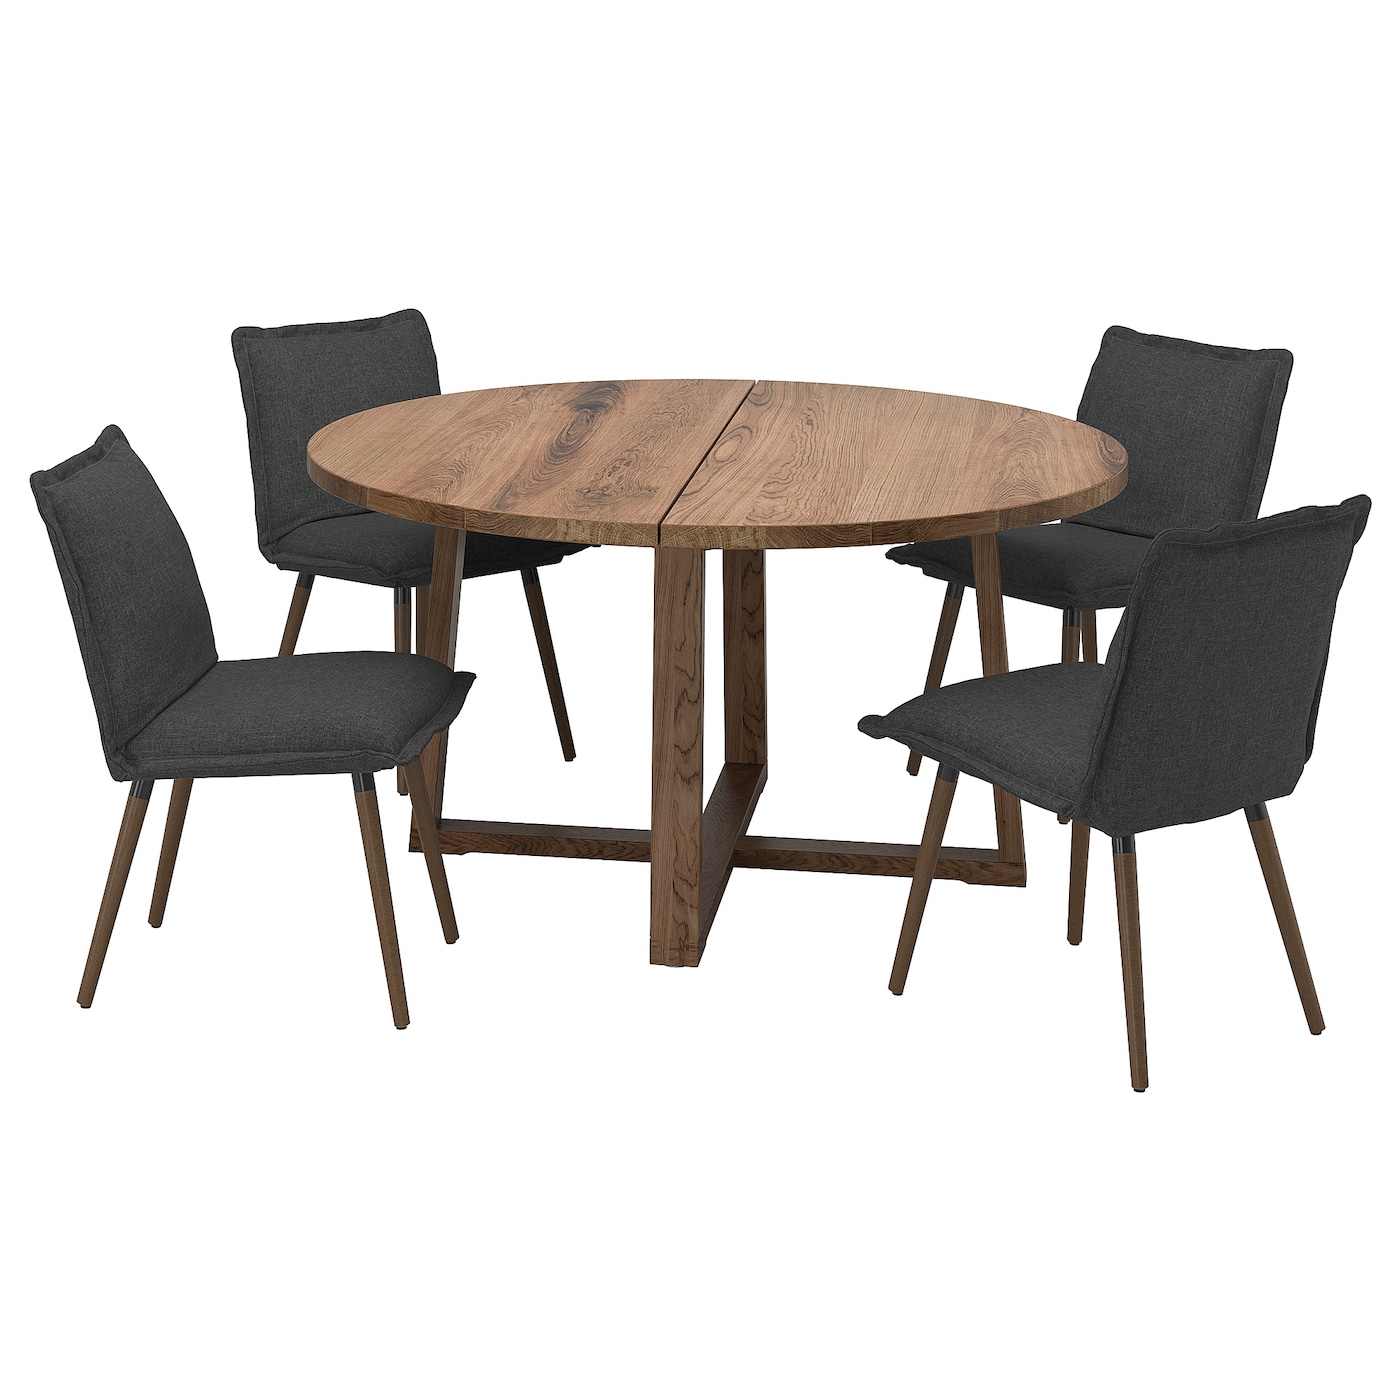 Стол и 4 стула - MÖRBYLÅNGA / KLINTEN/ MОRBYLАNGA IKEA/  МЁРБИЛОНГА / КЛИНТЕН ИКЕА,  145х75/ 81 см,  коричневый/ темно-серый